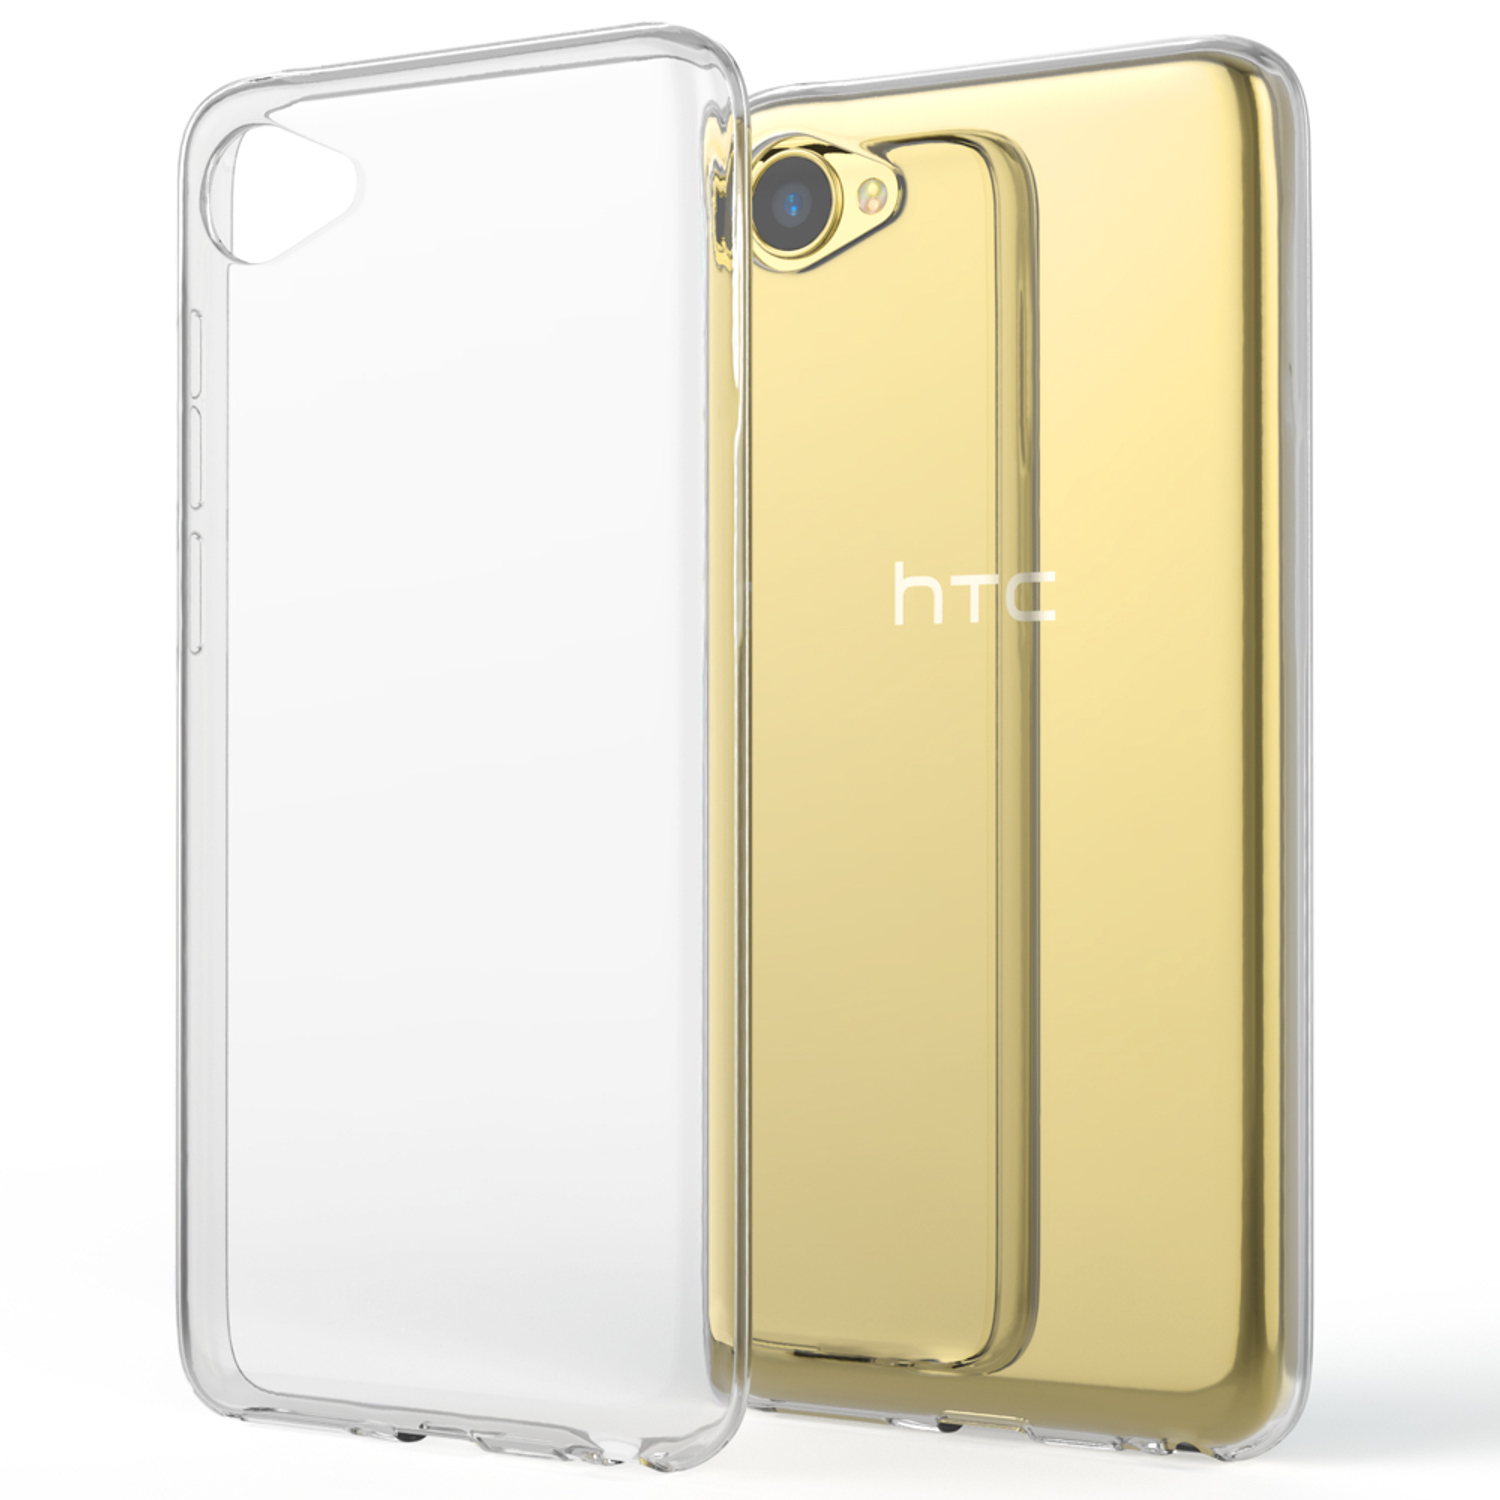 12, Silikon Hülle, HTC, Backcover, Transparente Transparent Desire Klar NALIA